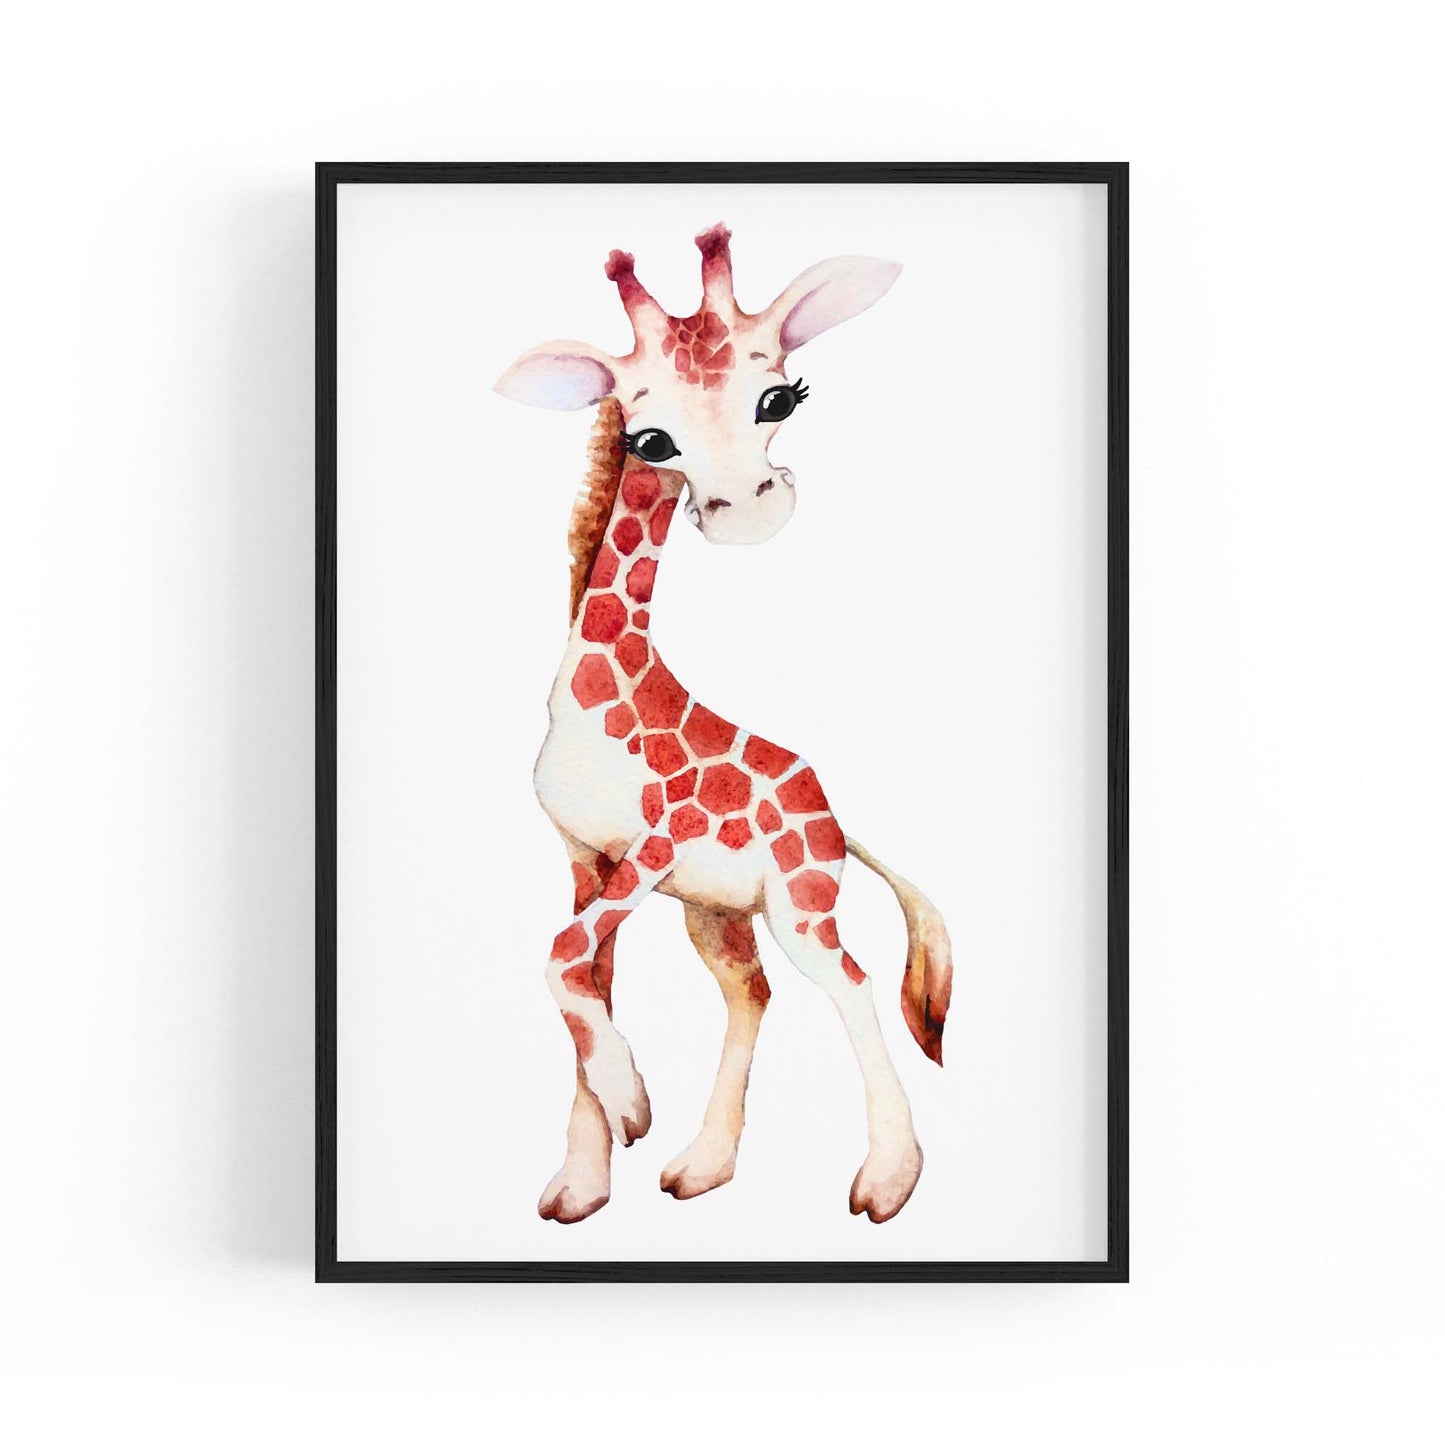 Cartoon Giraffe Cute Nursery Baby Animal Wall Art #1 - The Affordable Art Company